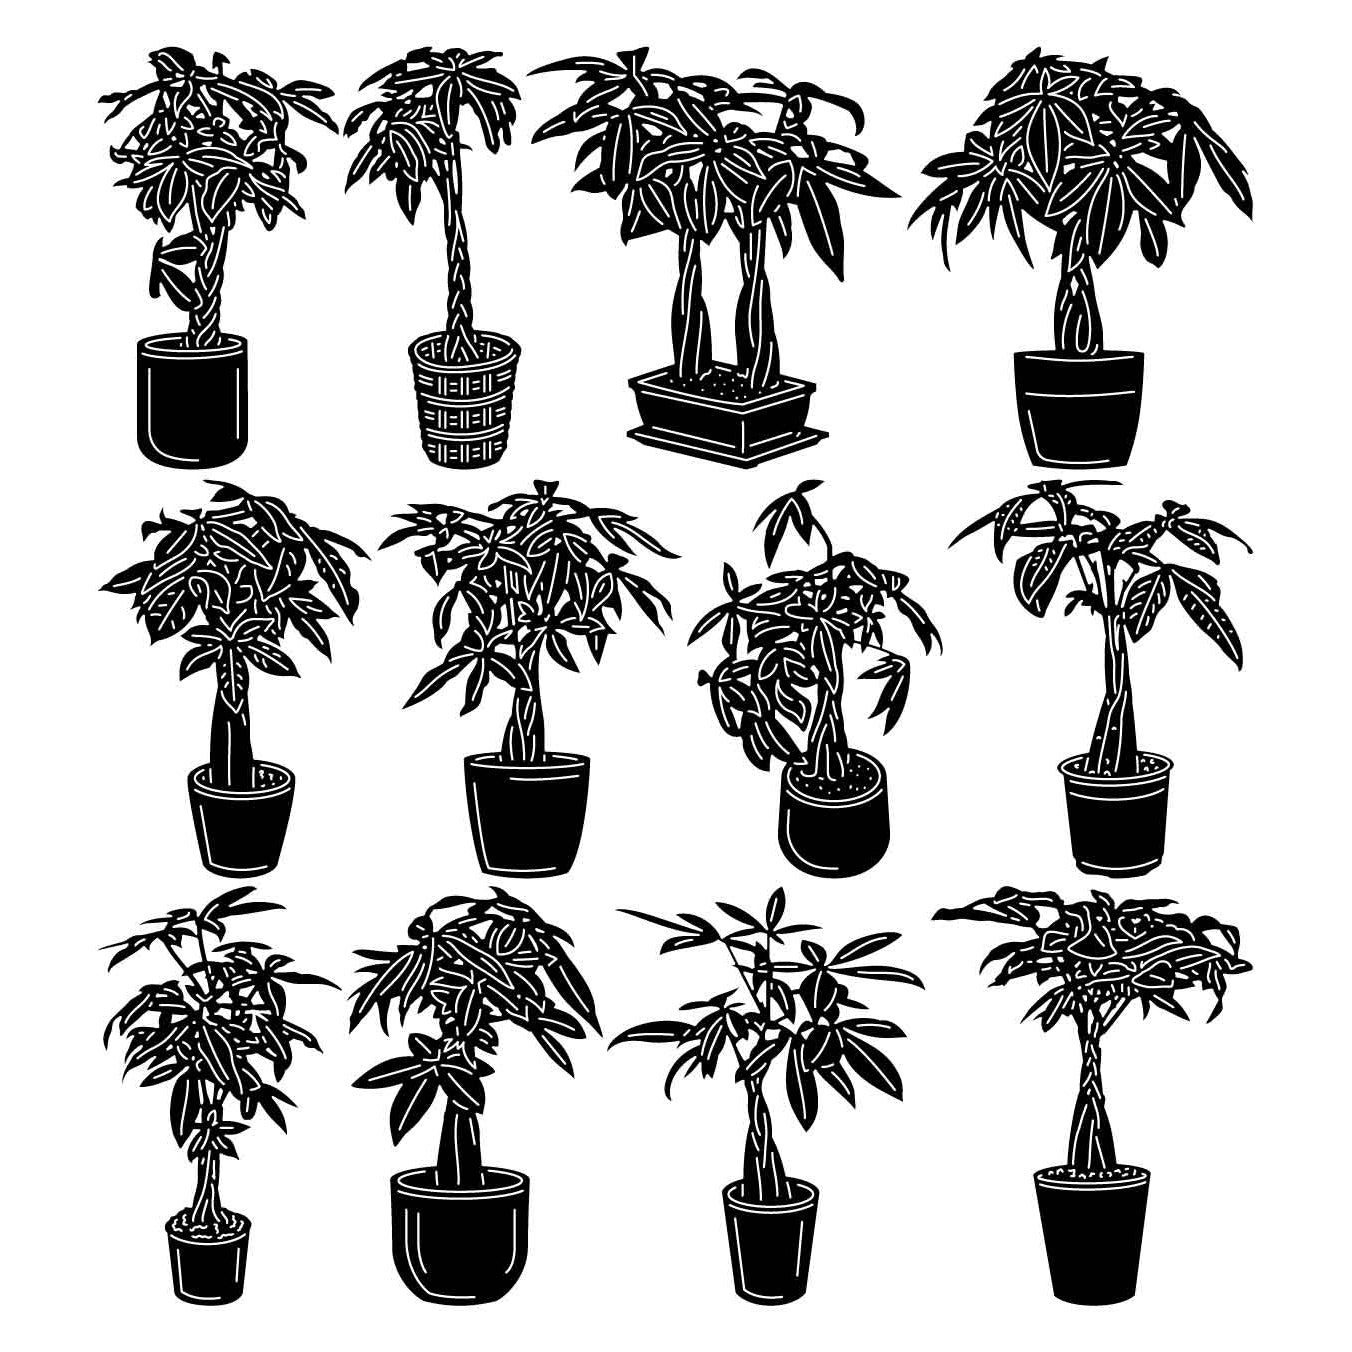 Money Trees, Good Luck Plants-DXF files Cut Ready for CNC-DXFforCNC.com